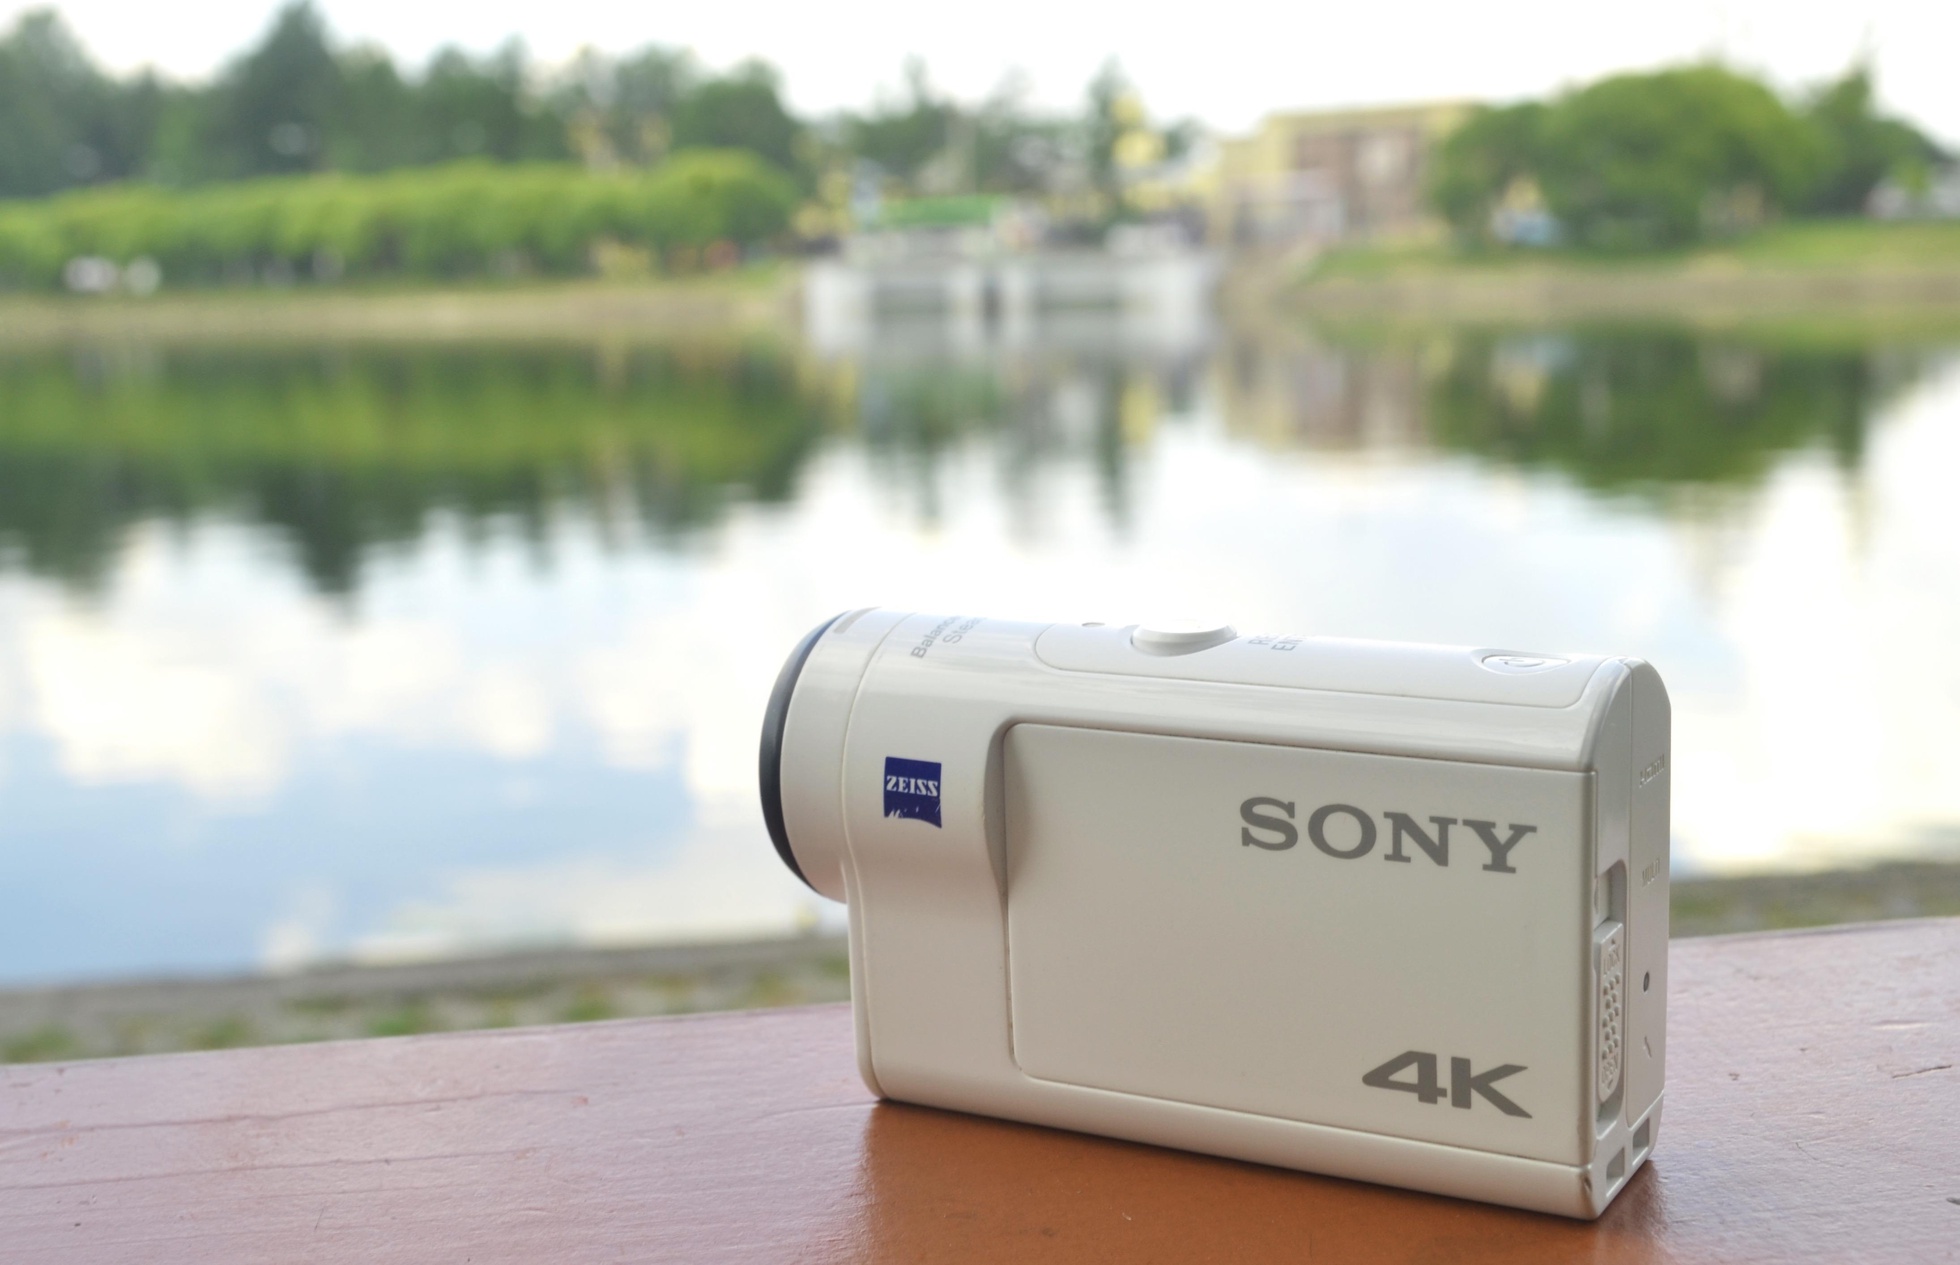 Sony FDR X3000 action camera murah berkualitas